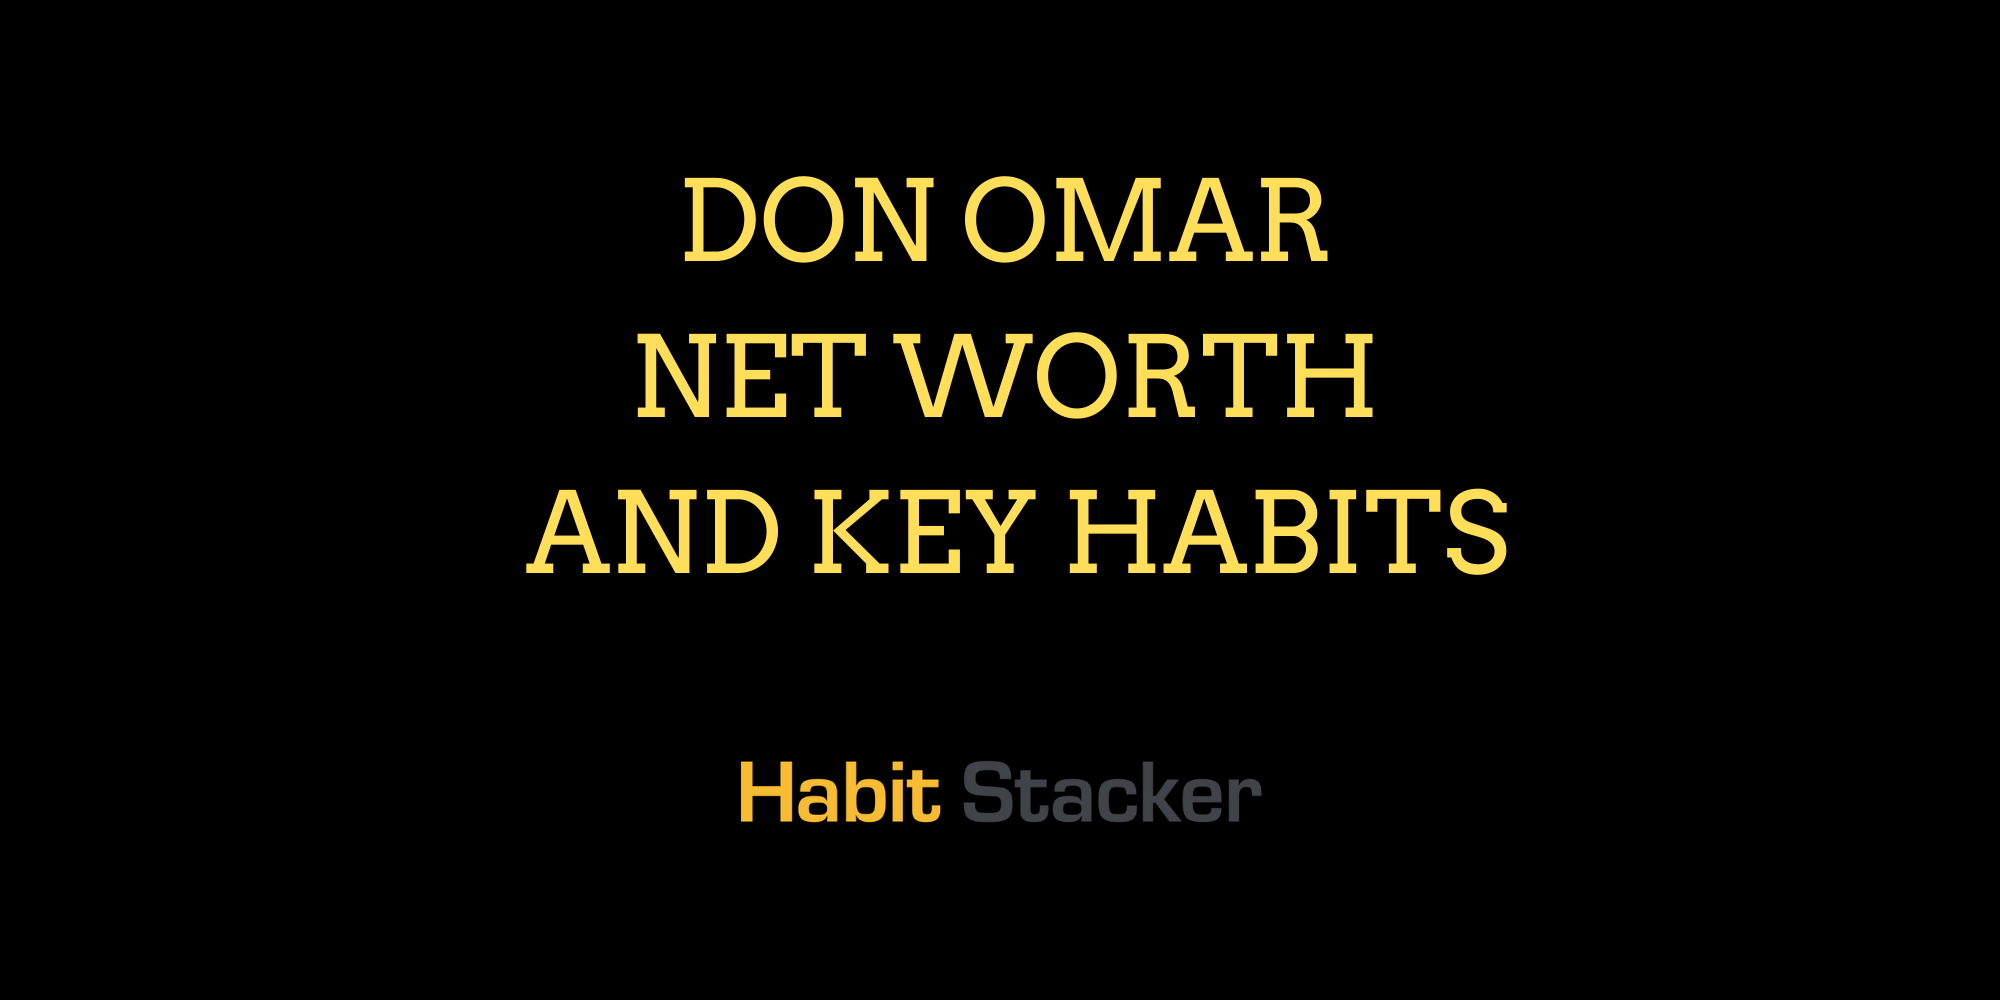 Don Omar Net Worth and Key Habits